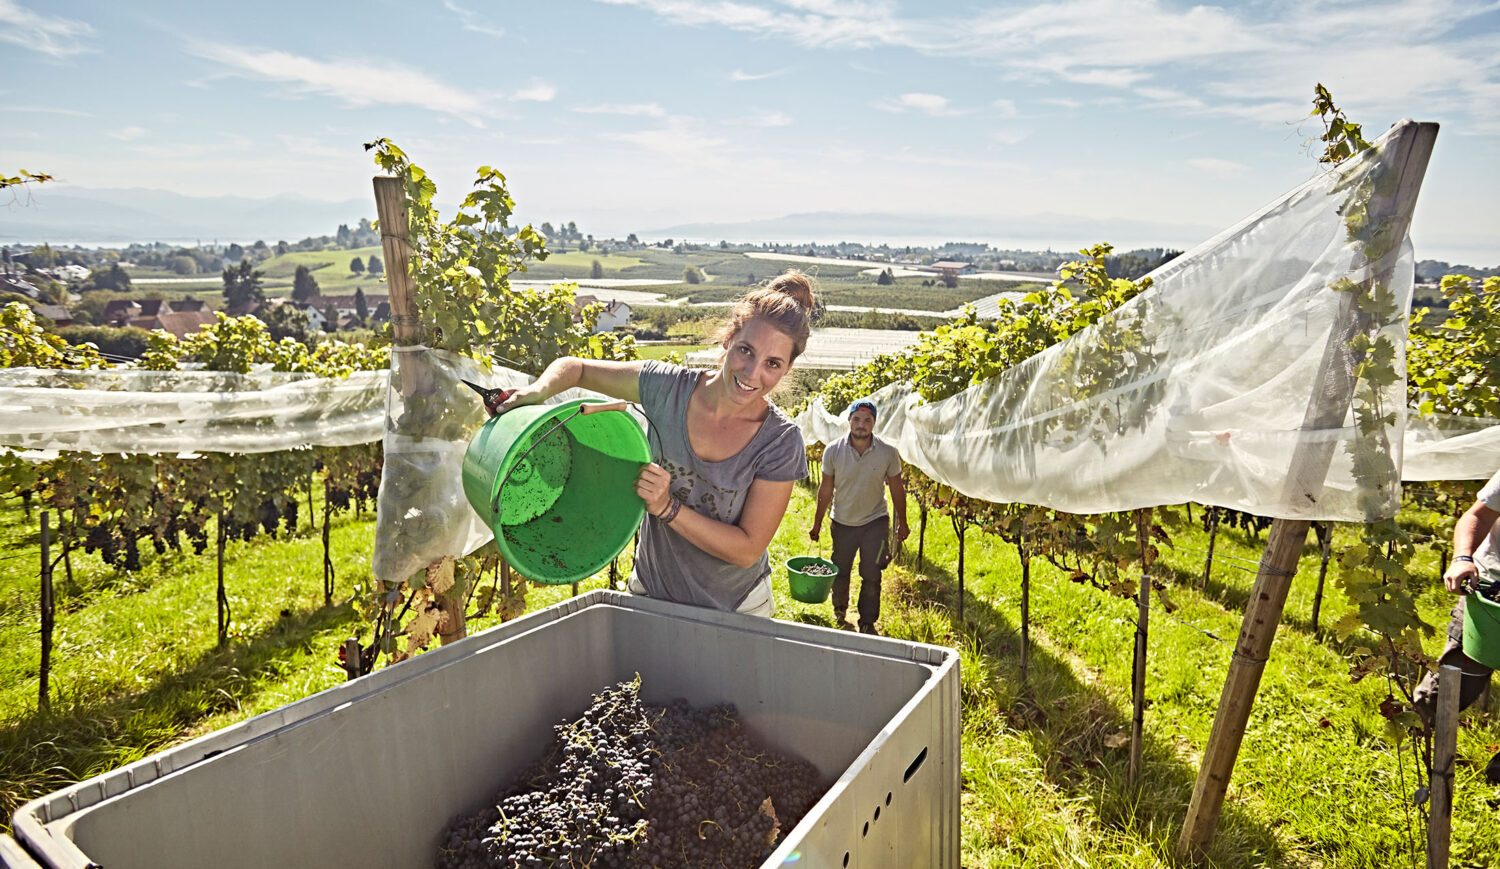 Winemaker Teresa Deufel produces organic wines on the family farm